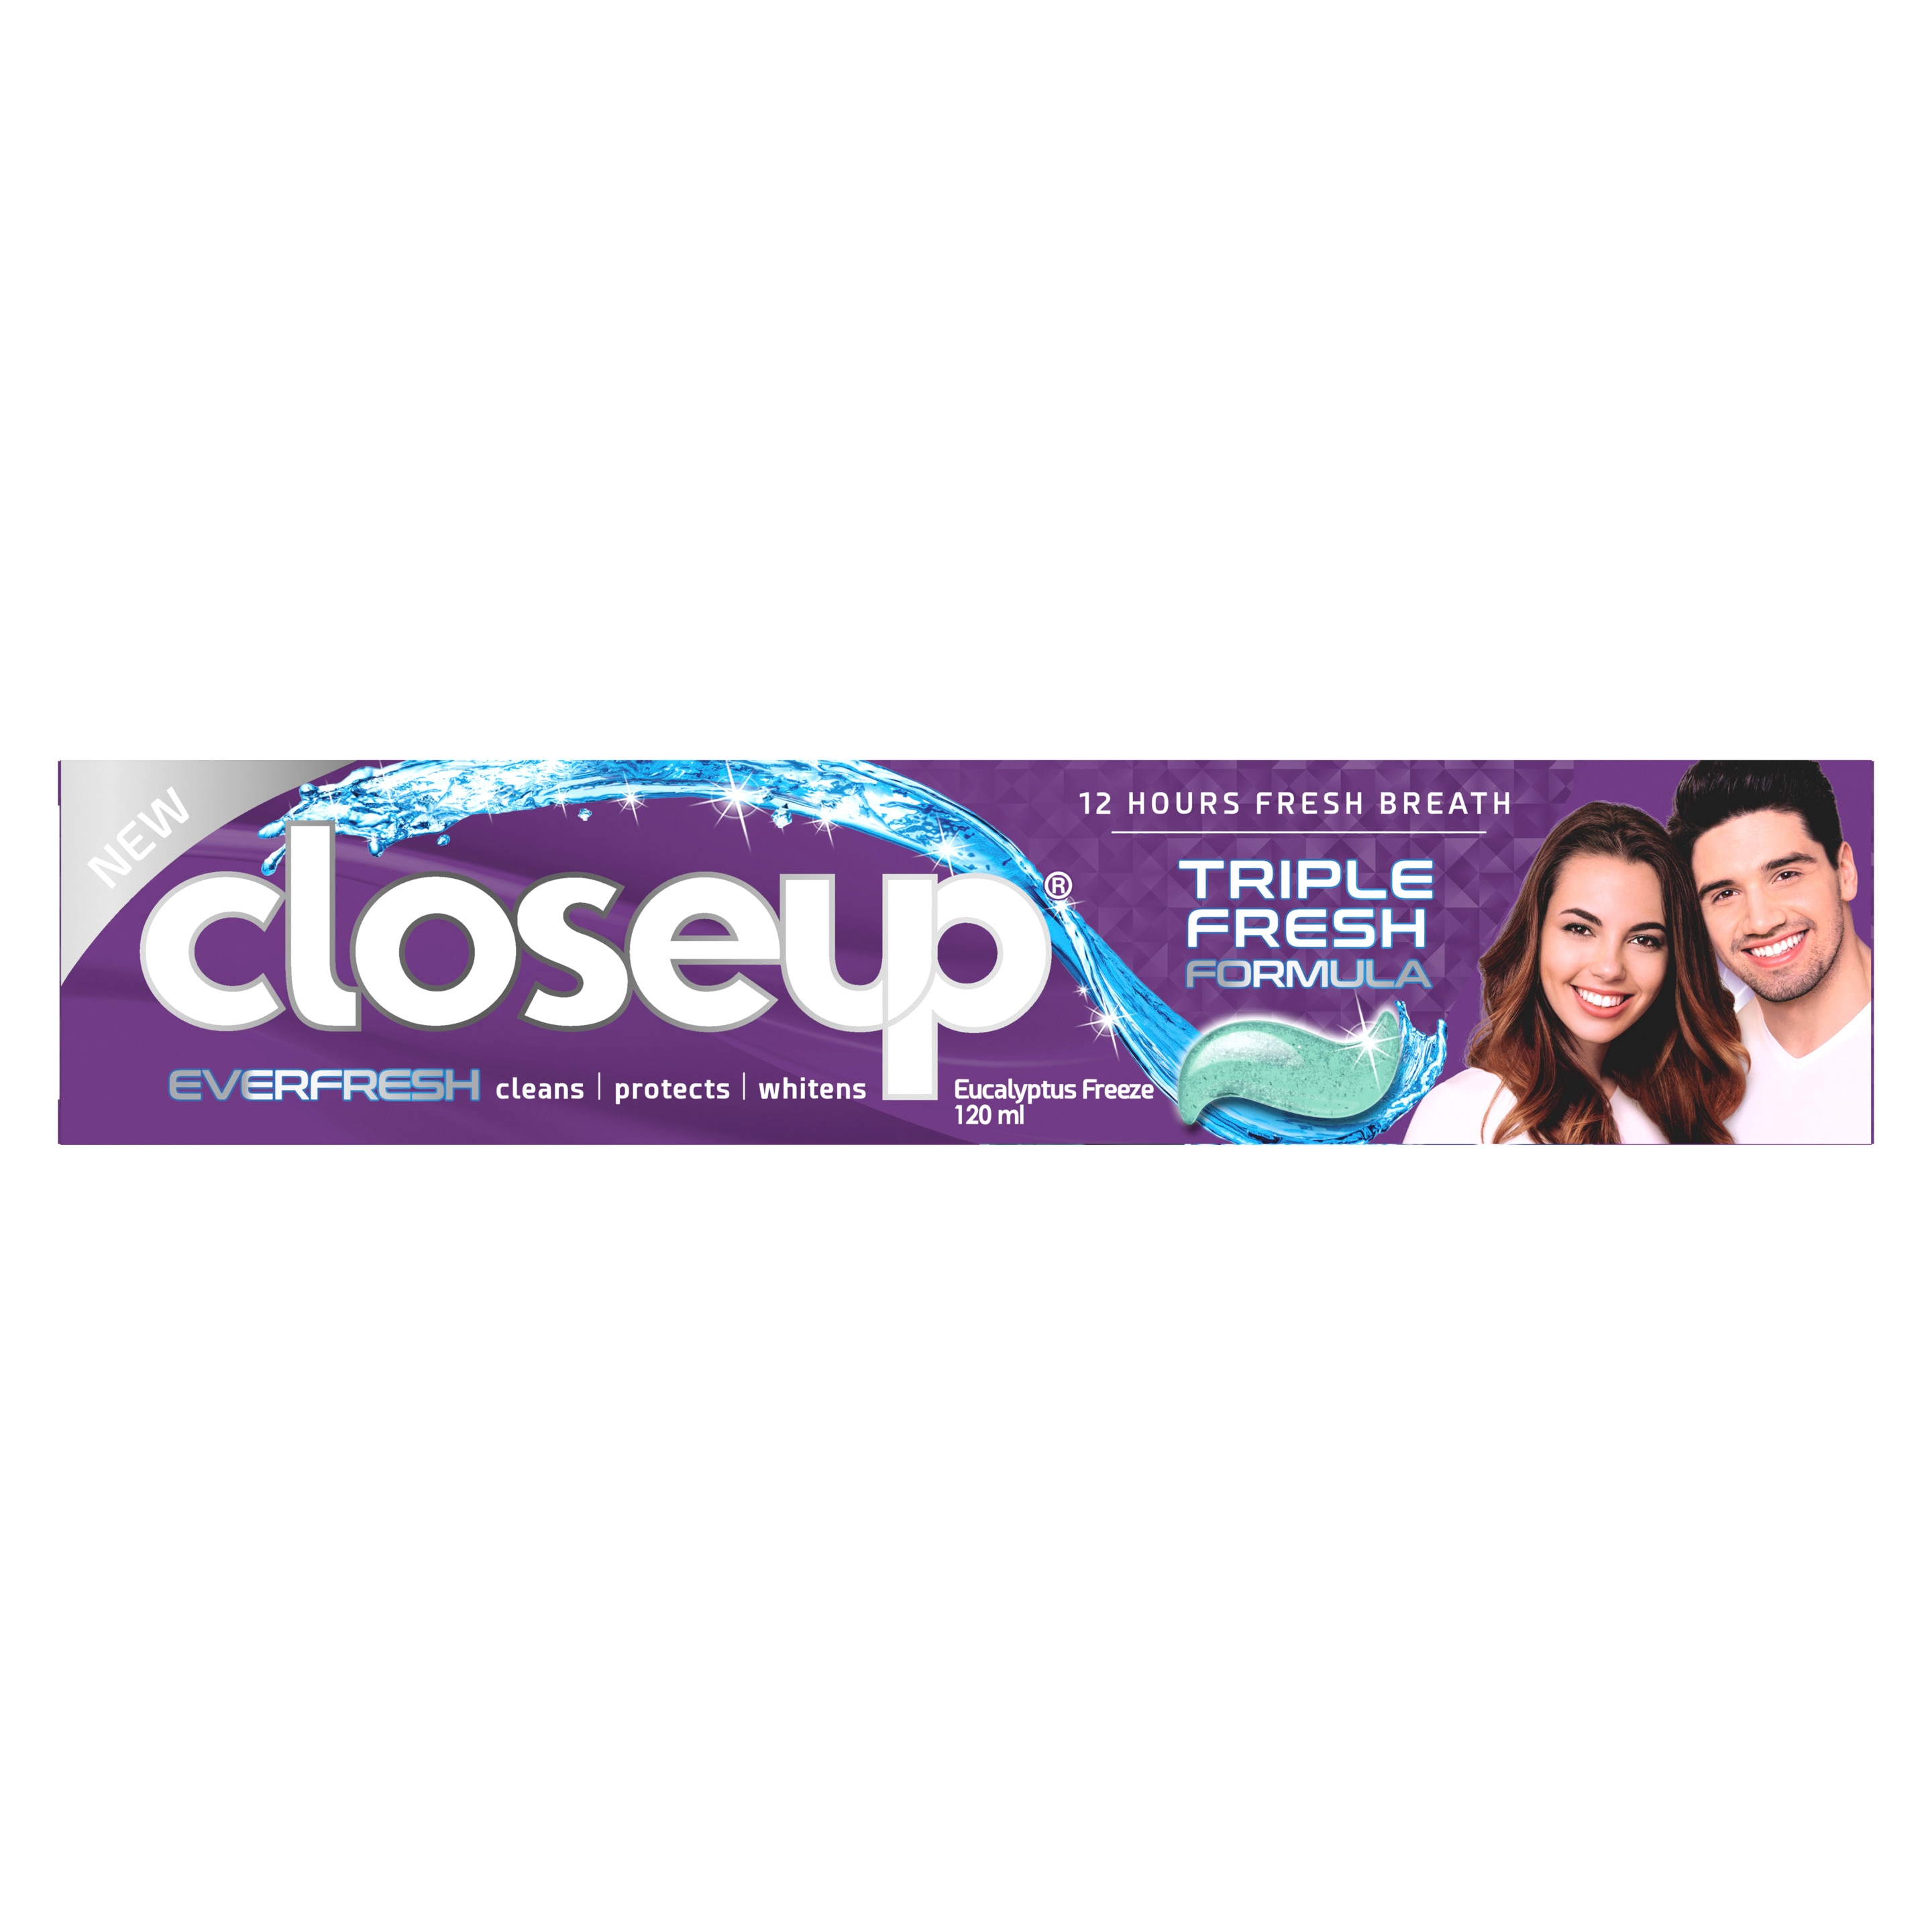 CLOSE UP Triple Fresh Formula Gel Toothpaste, Eucalyptus Freeze, 120ml